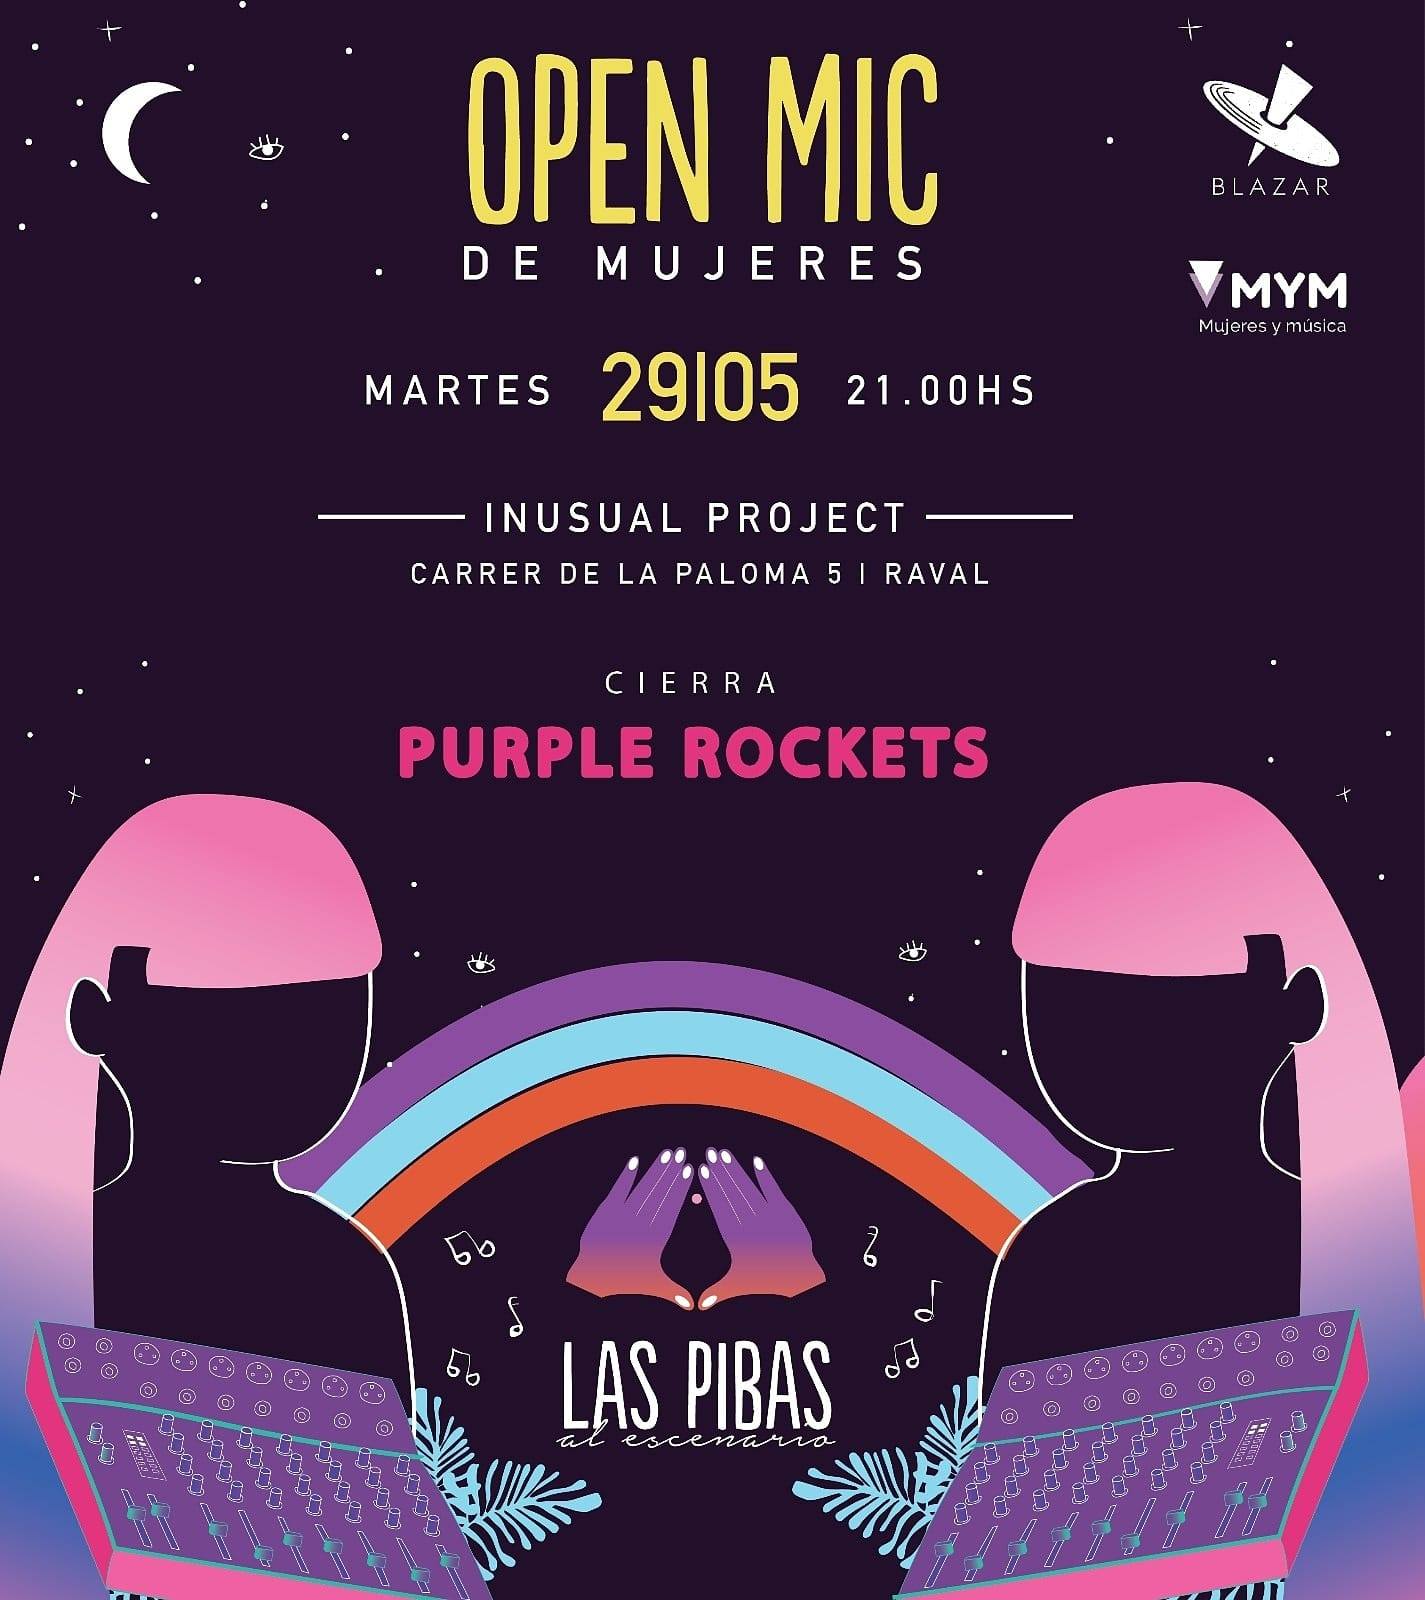 Open-MIc-Mujeres-Barcelona